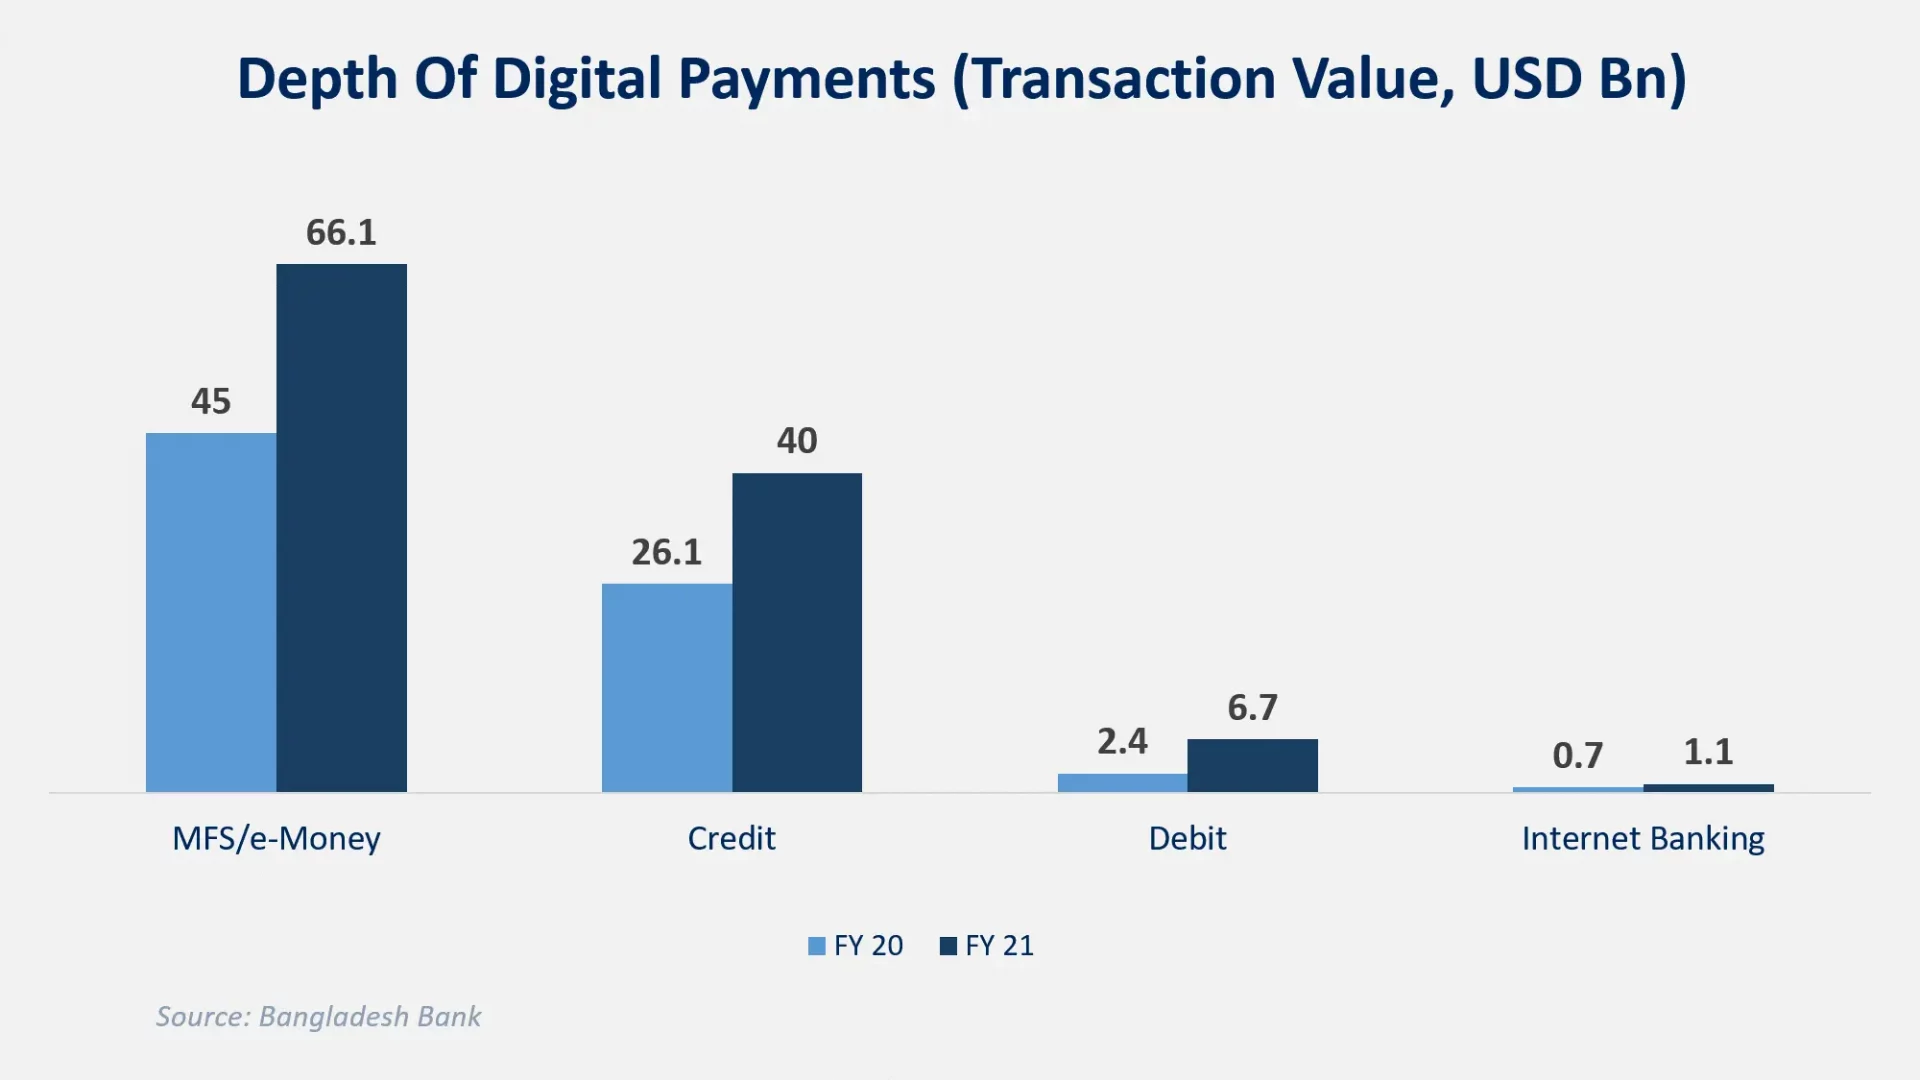 Depth of Digital Payments